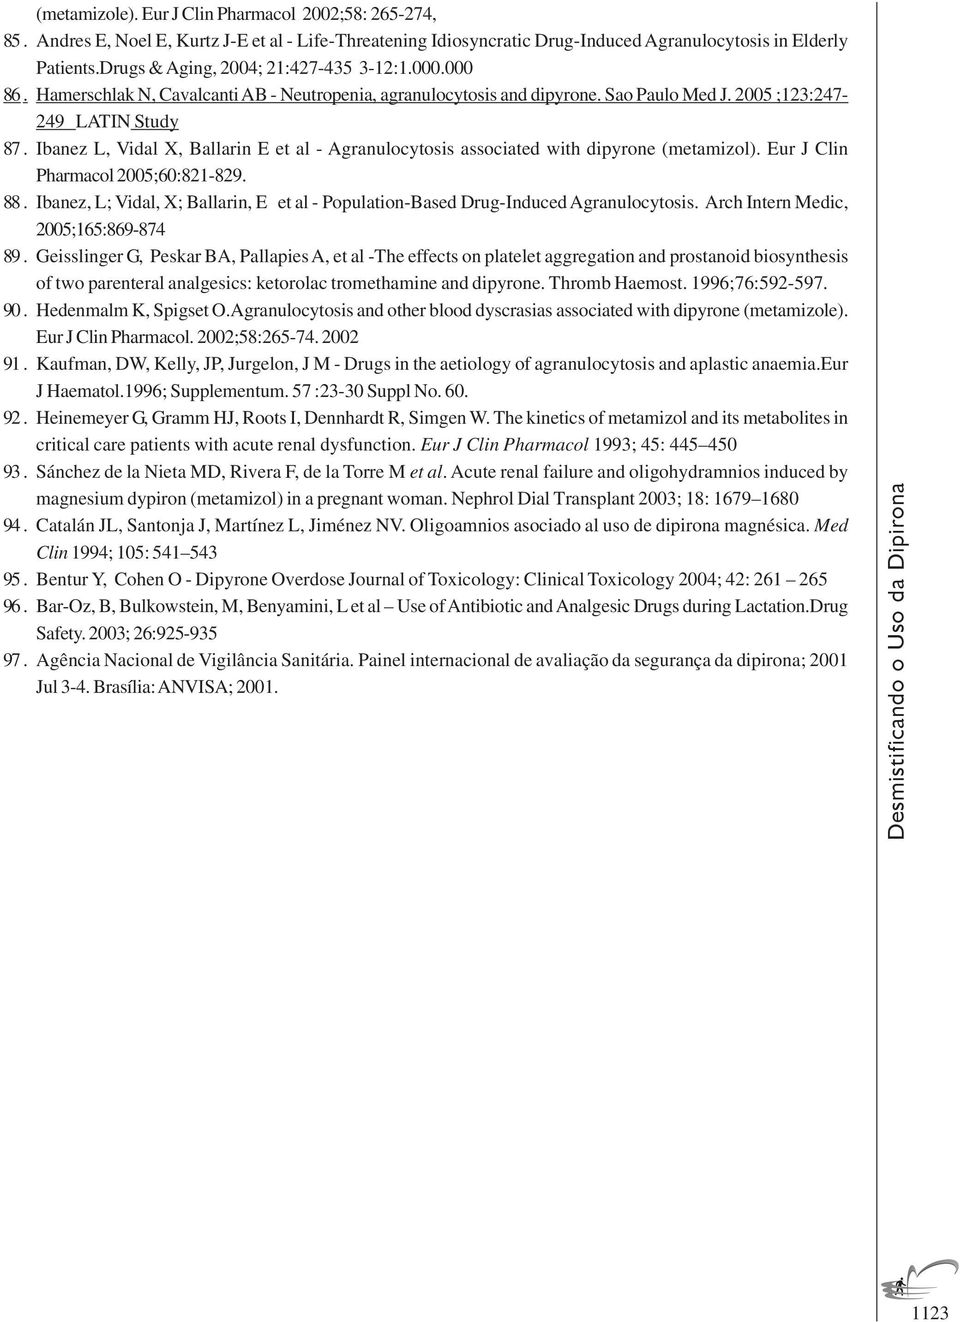 Ibanez L, Vidal X, Ballarin E et al - Agranulocytosis associated with dipyrone (metamizol). Eur J Clin Pharmacol 2005;60:821-829. 88.